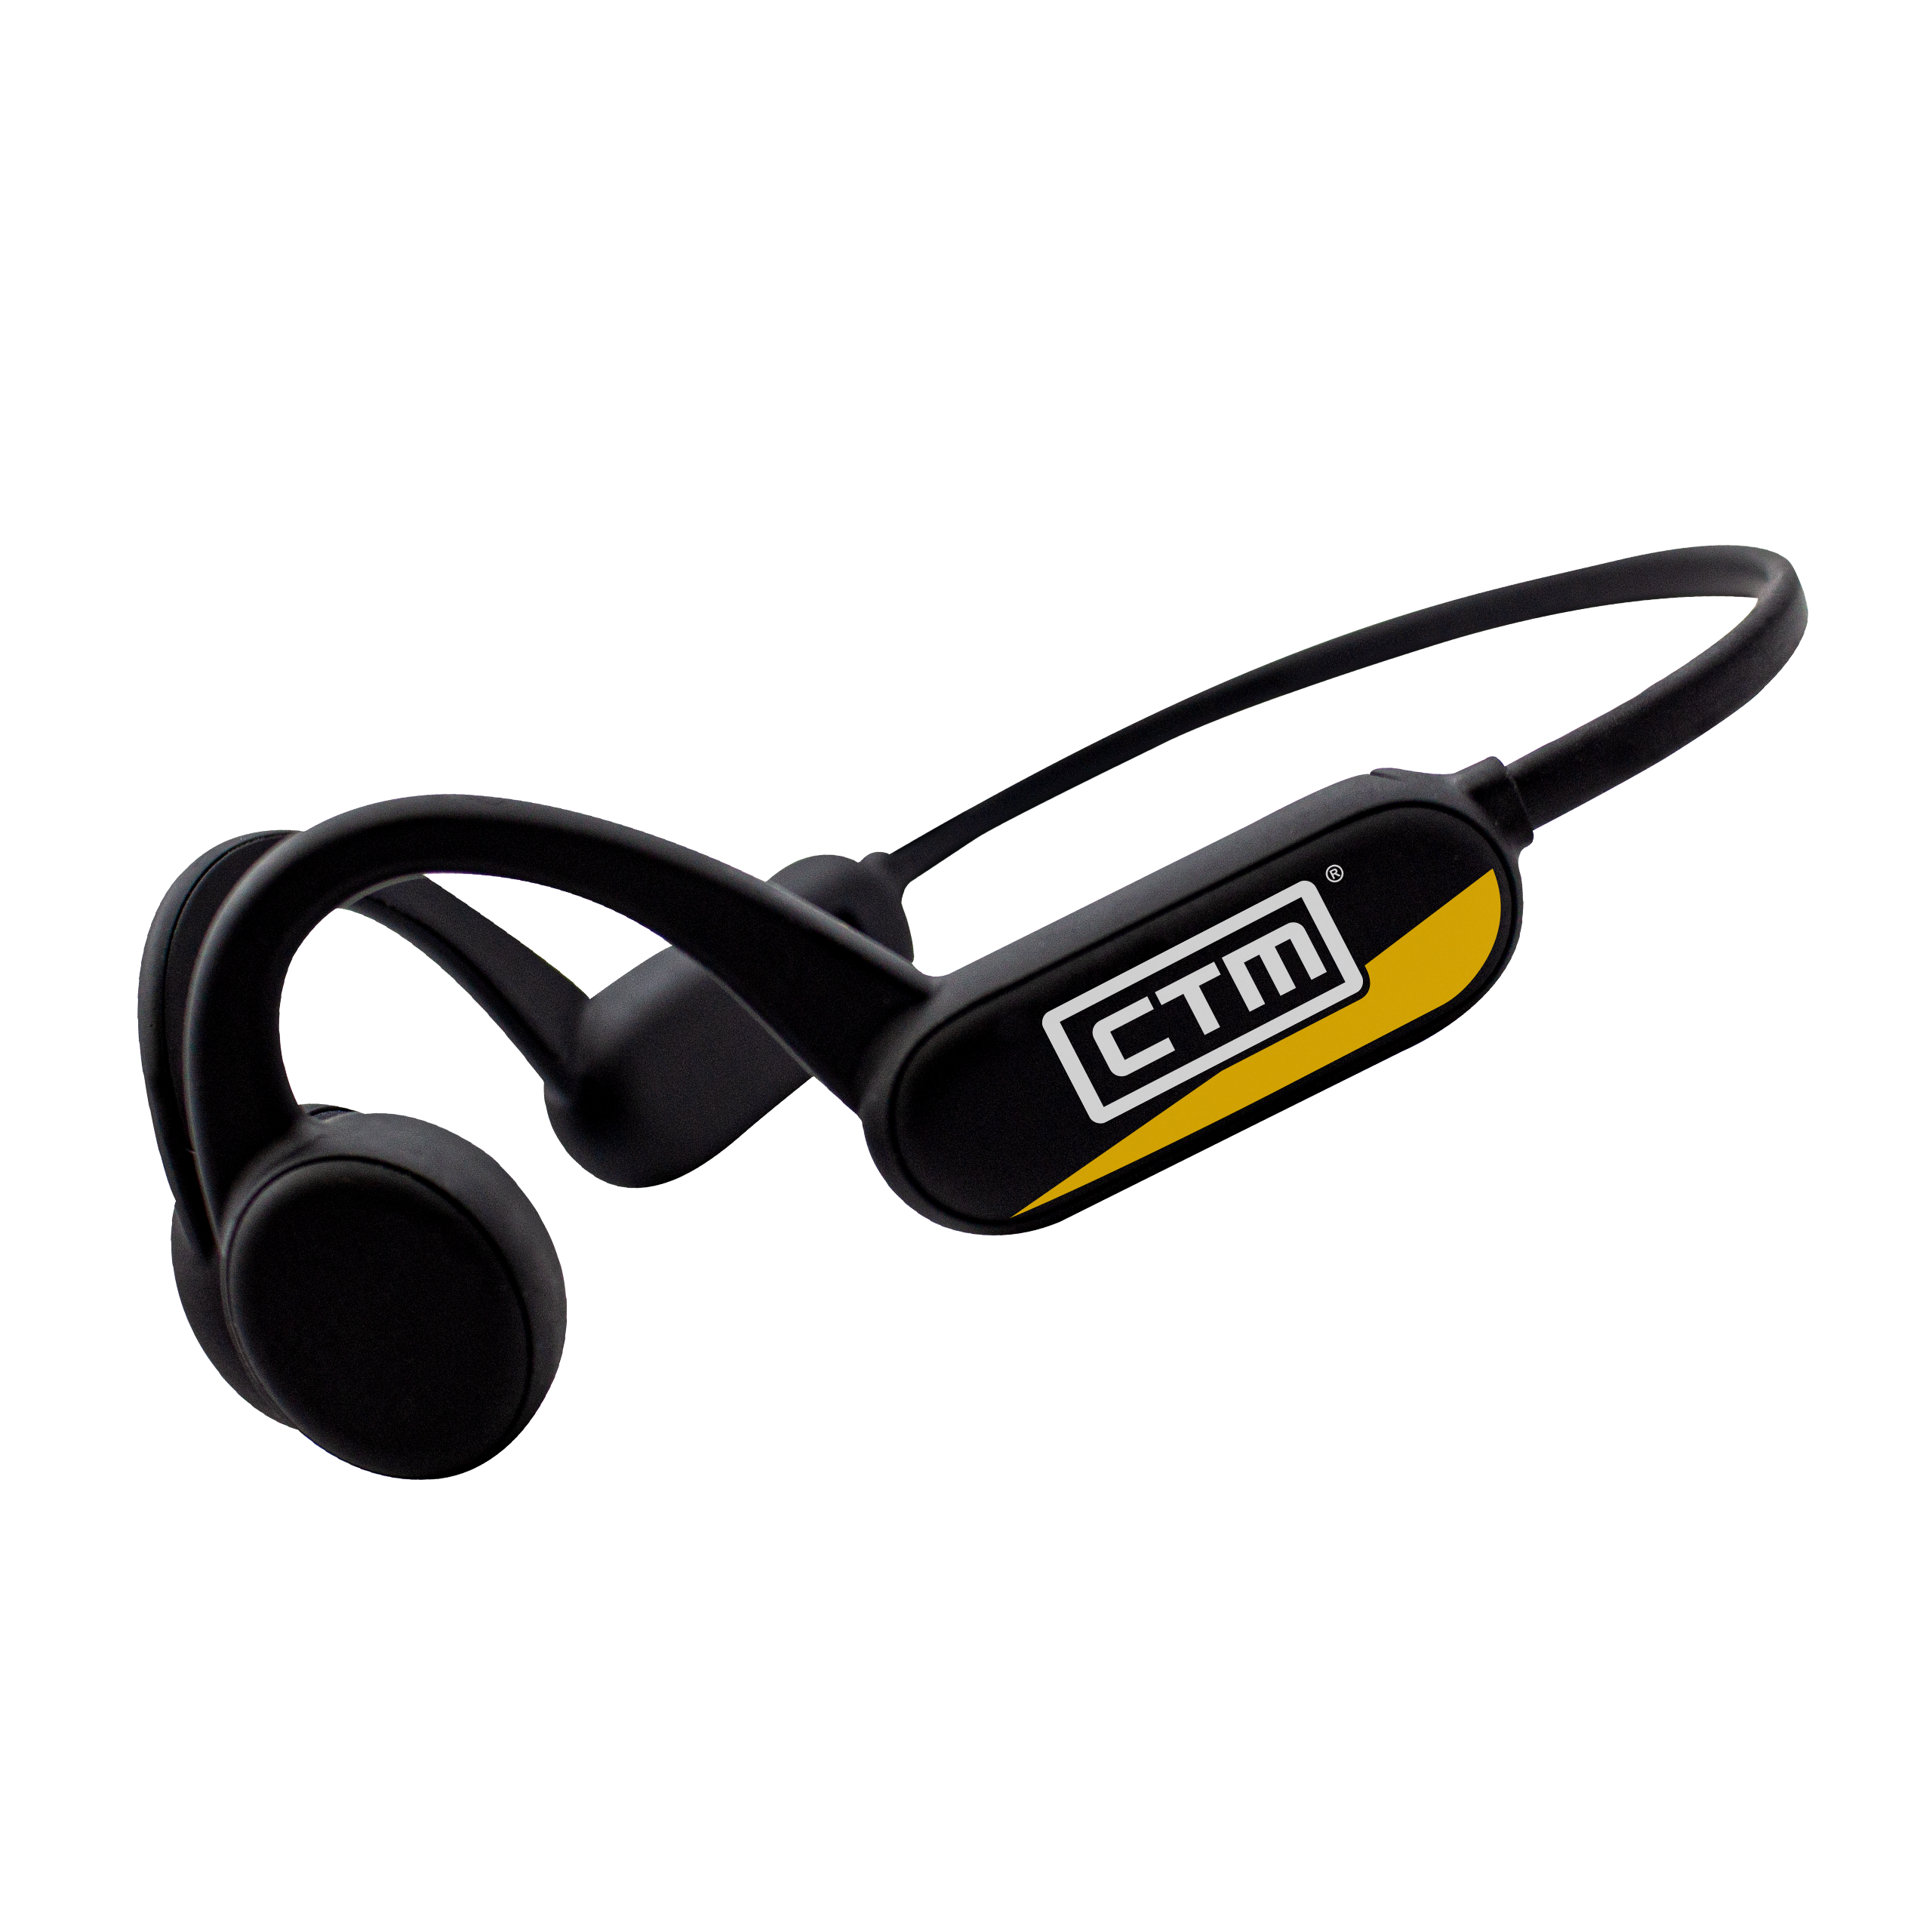 ORUN2 - Bone Conduction Headphones by Clear Tune Monitors